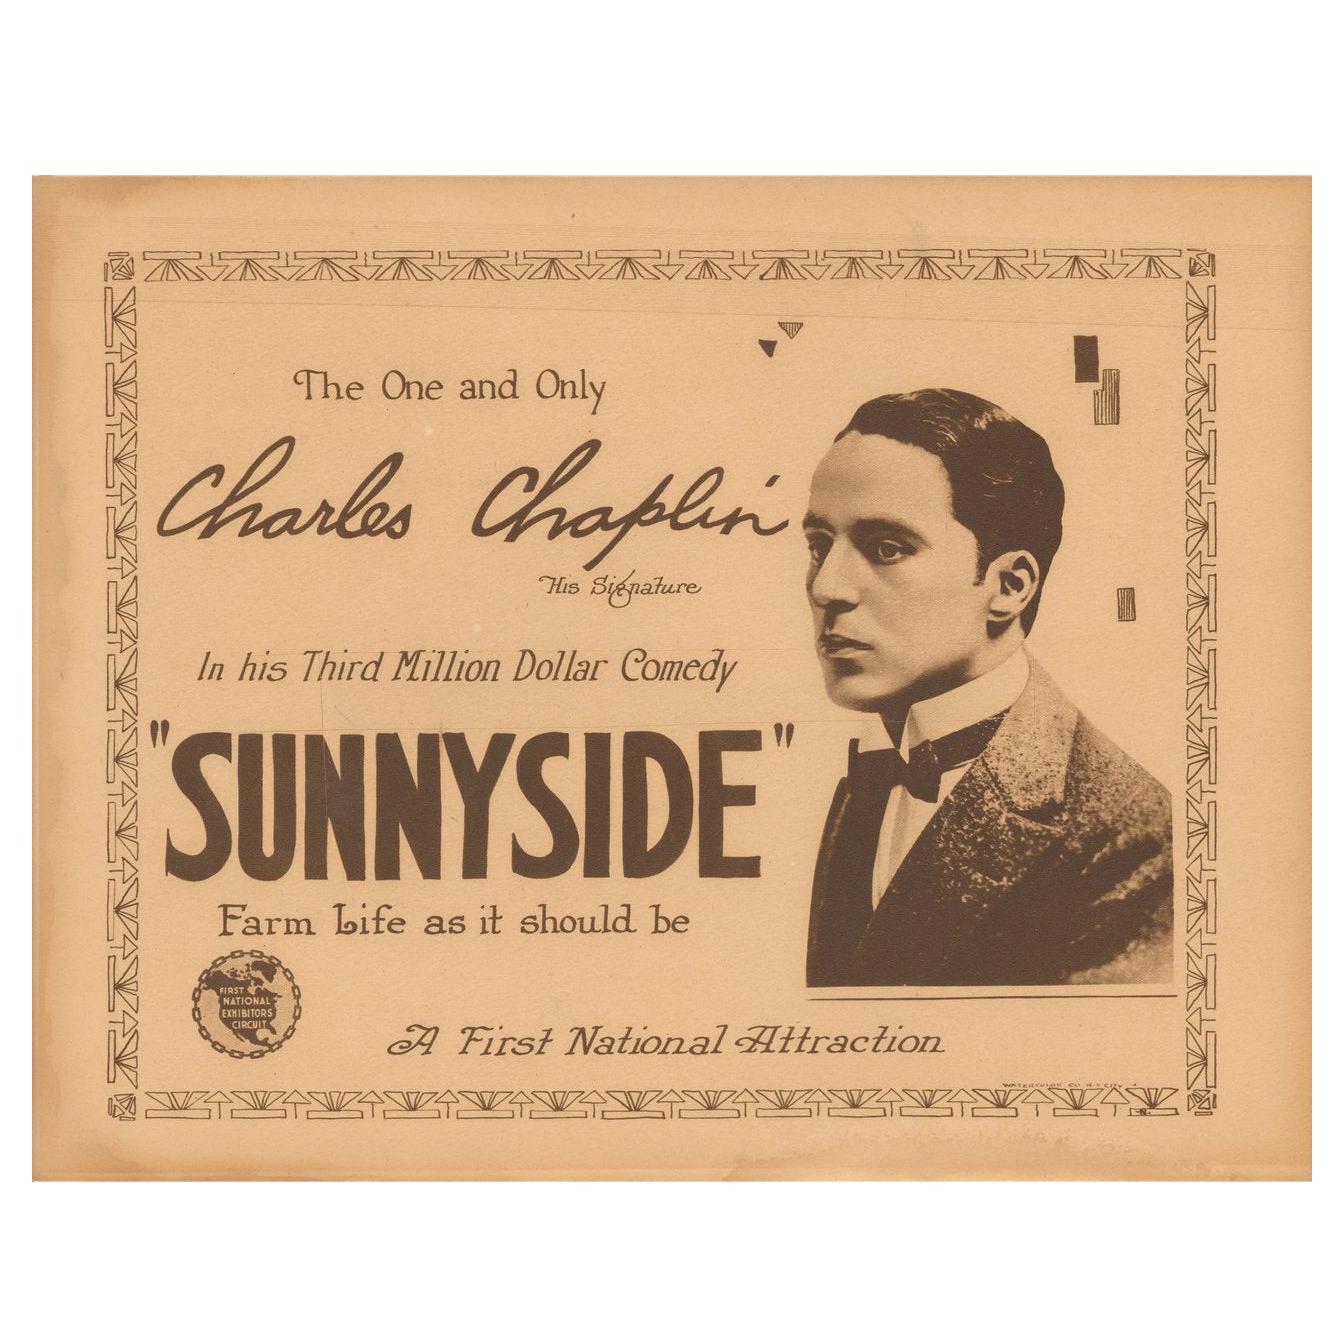 Sunnyside 1919 U.S. Title Card